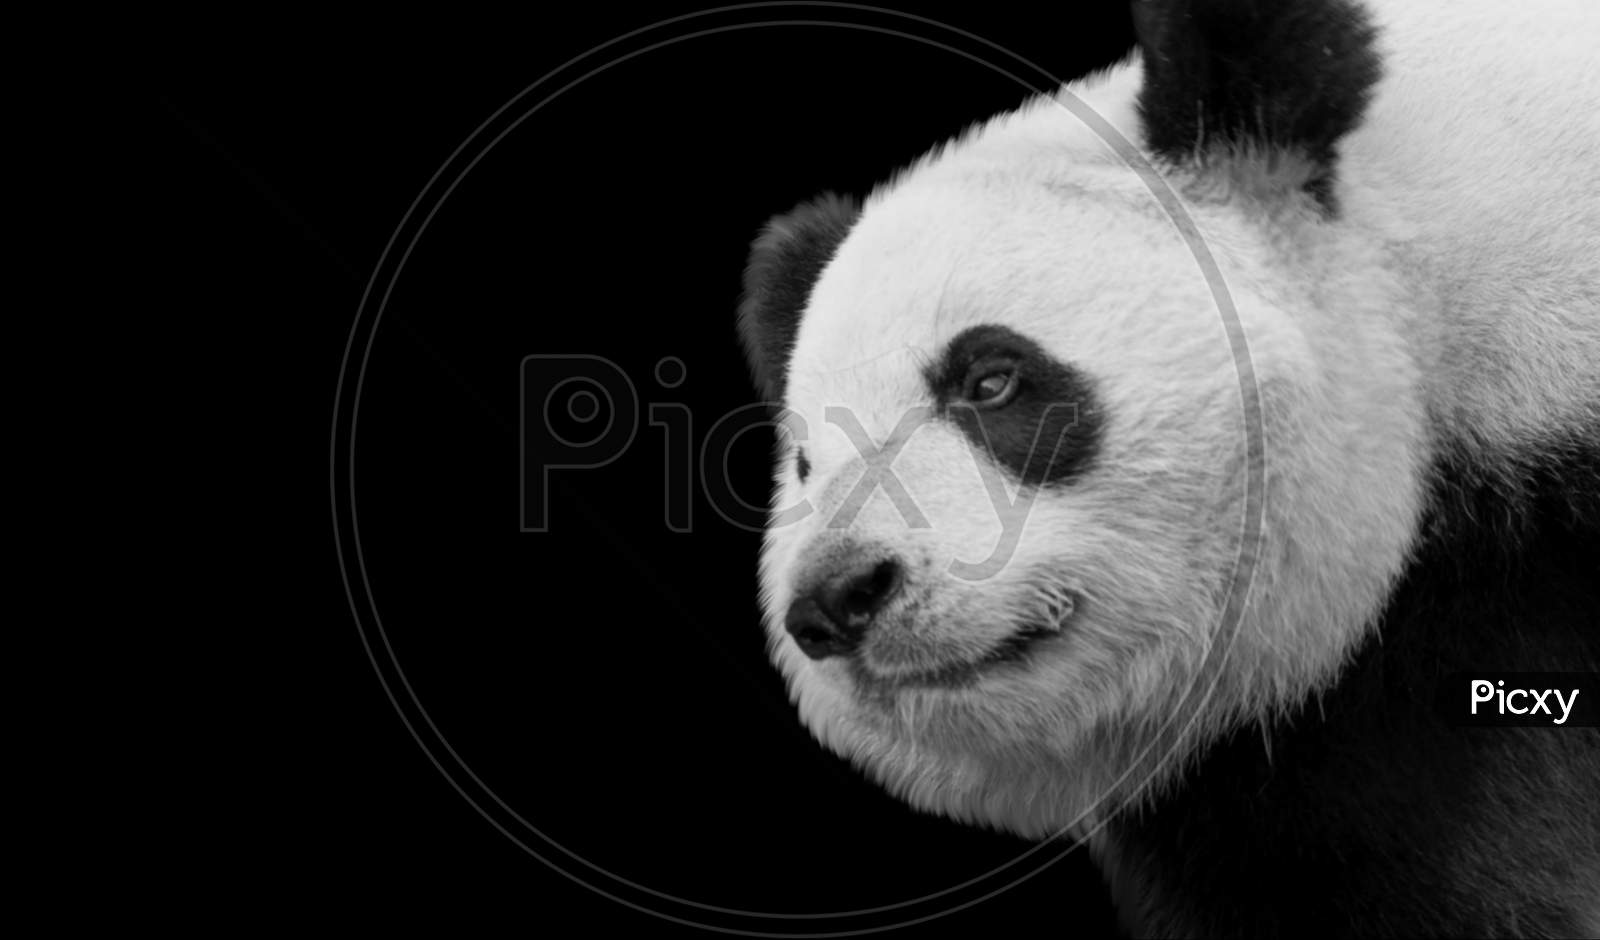 Cute Panda Portrait Face On The Dark Background